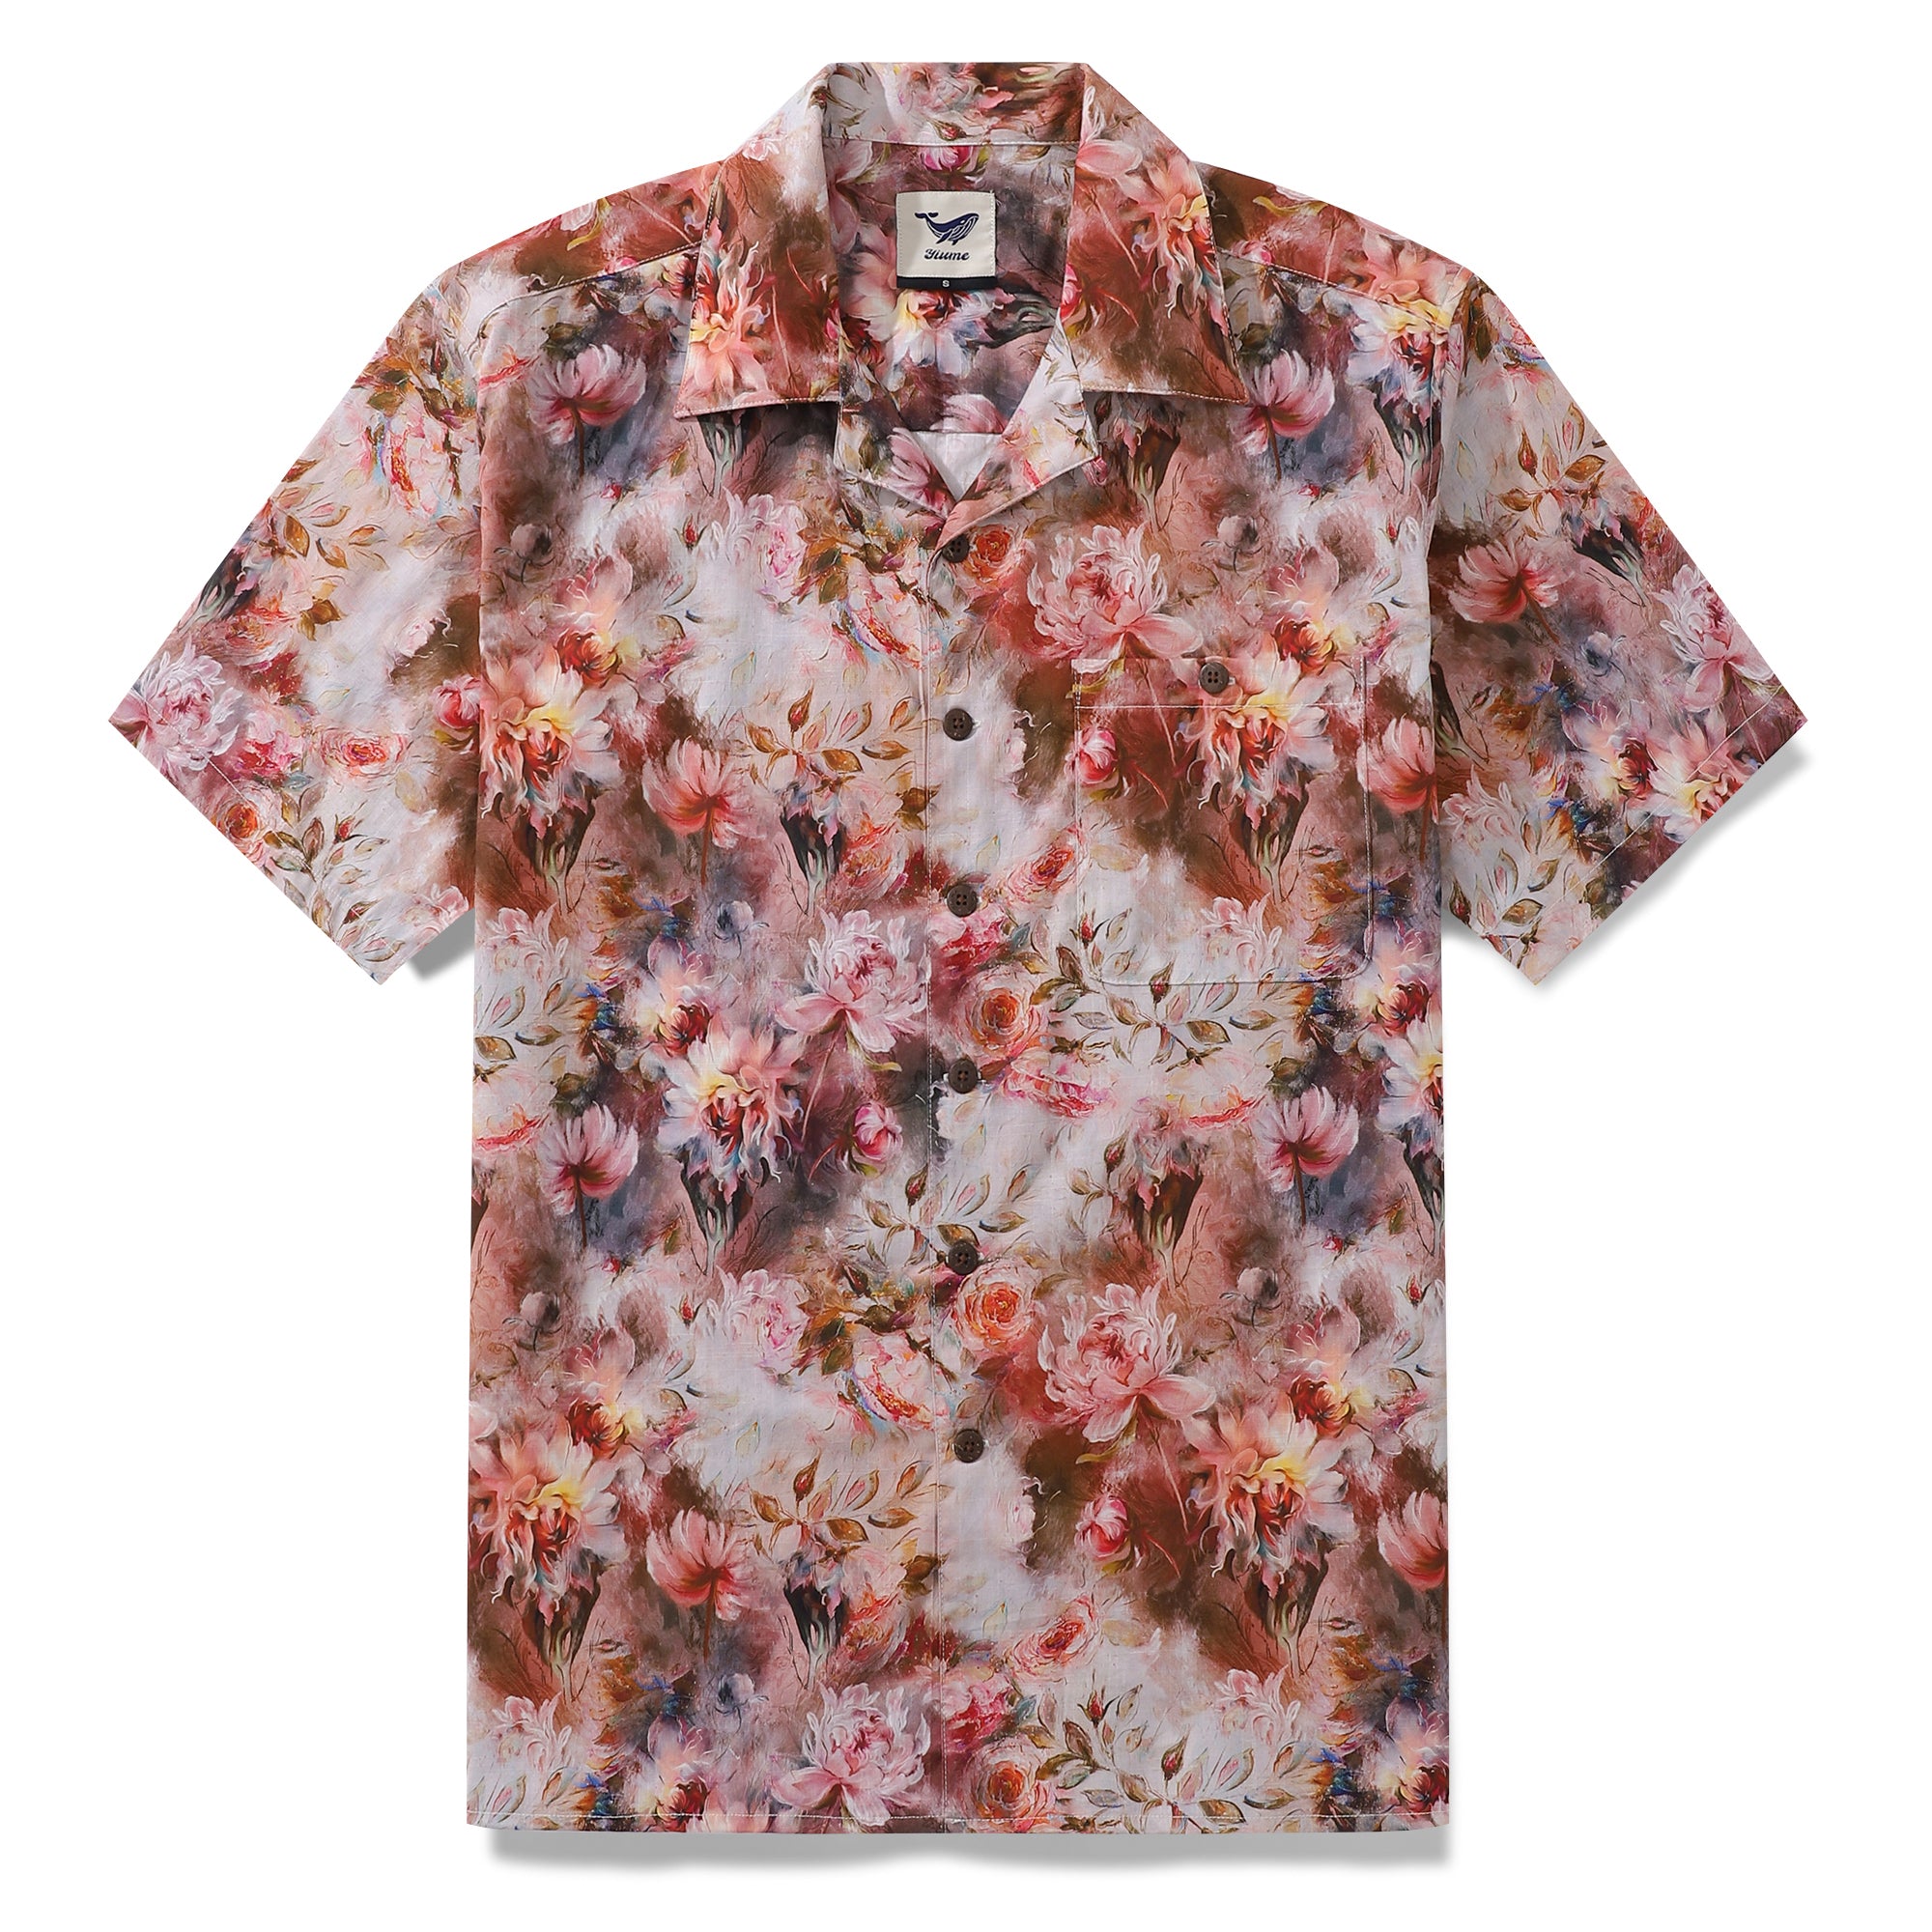 Hawaiian Shirt For Men Pink Floral Gouache By Brooklyn Bees Design Studio Shirt Camp Collar 100% Cotton